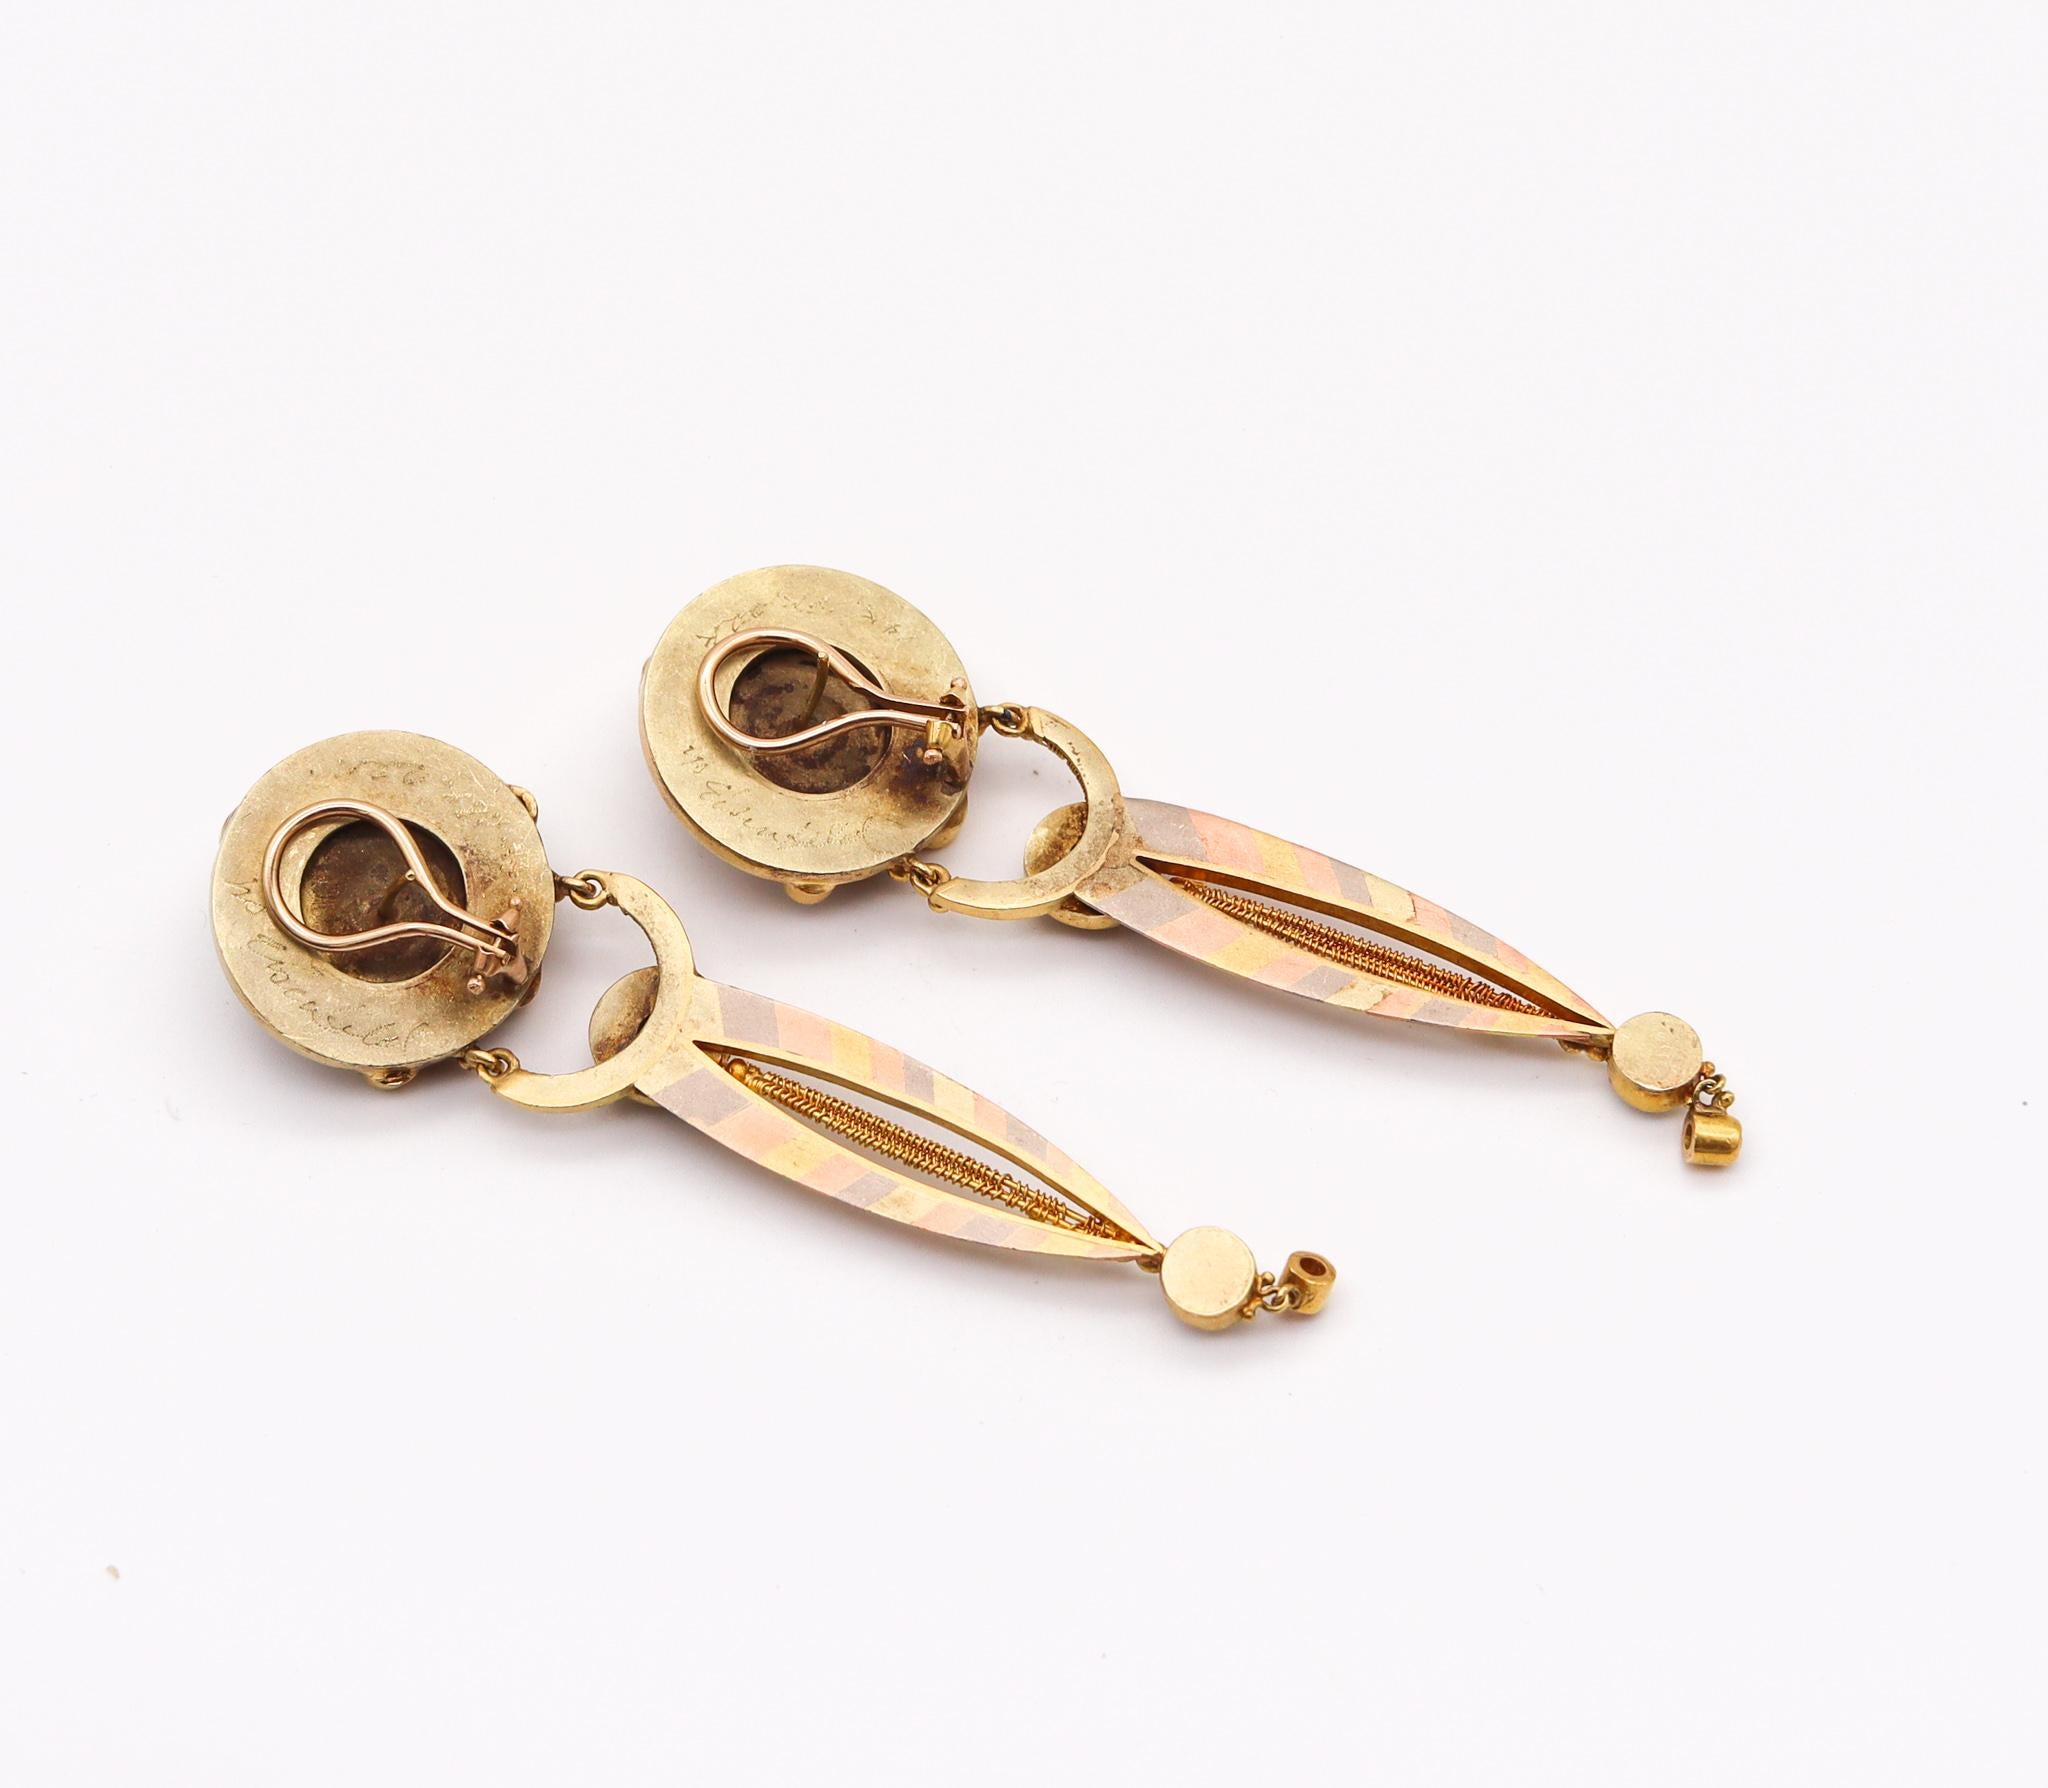 Brilliant Cut Vicki Eisenfeld Studio Rare Mokume Drop Earrings In 22Kt Gold With Gemstones For Sale